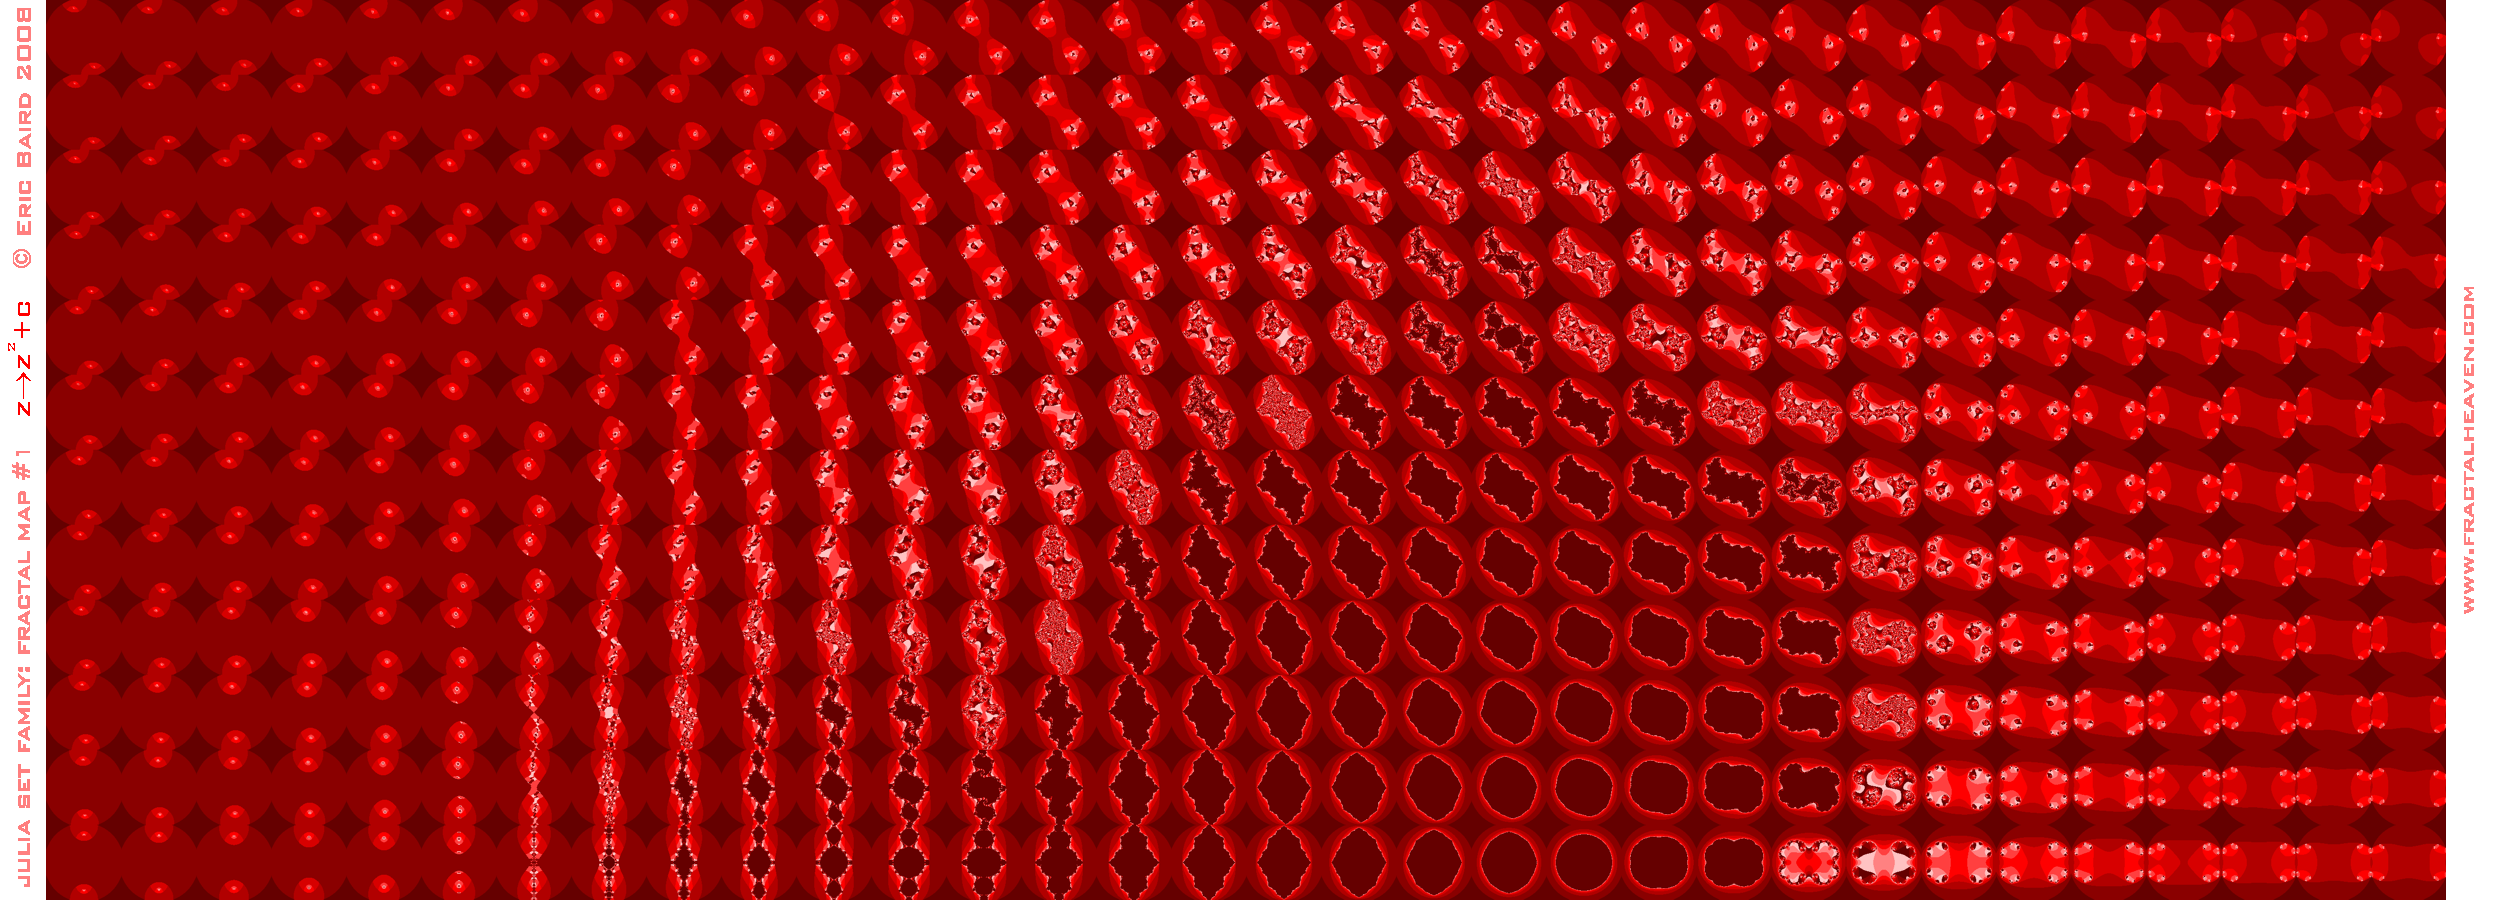 table-array of Julia Set fractal images, for z-squared, in red